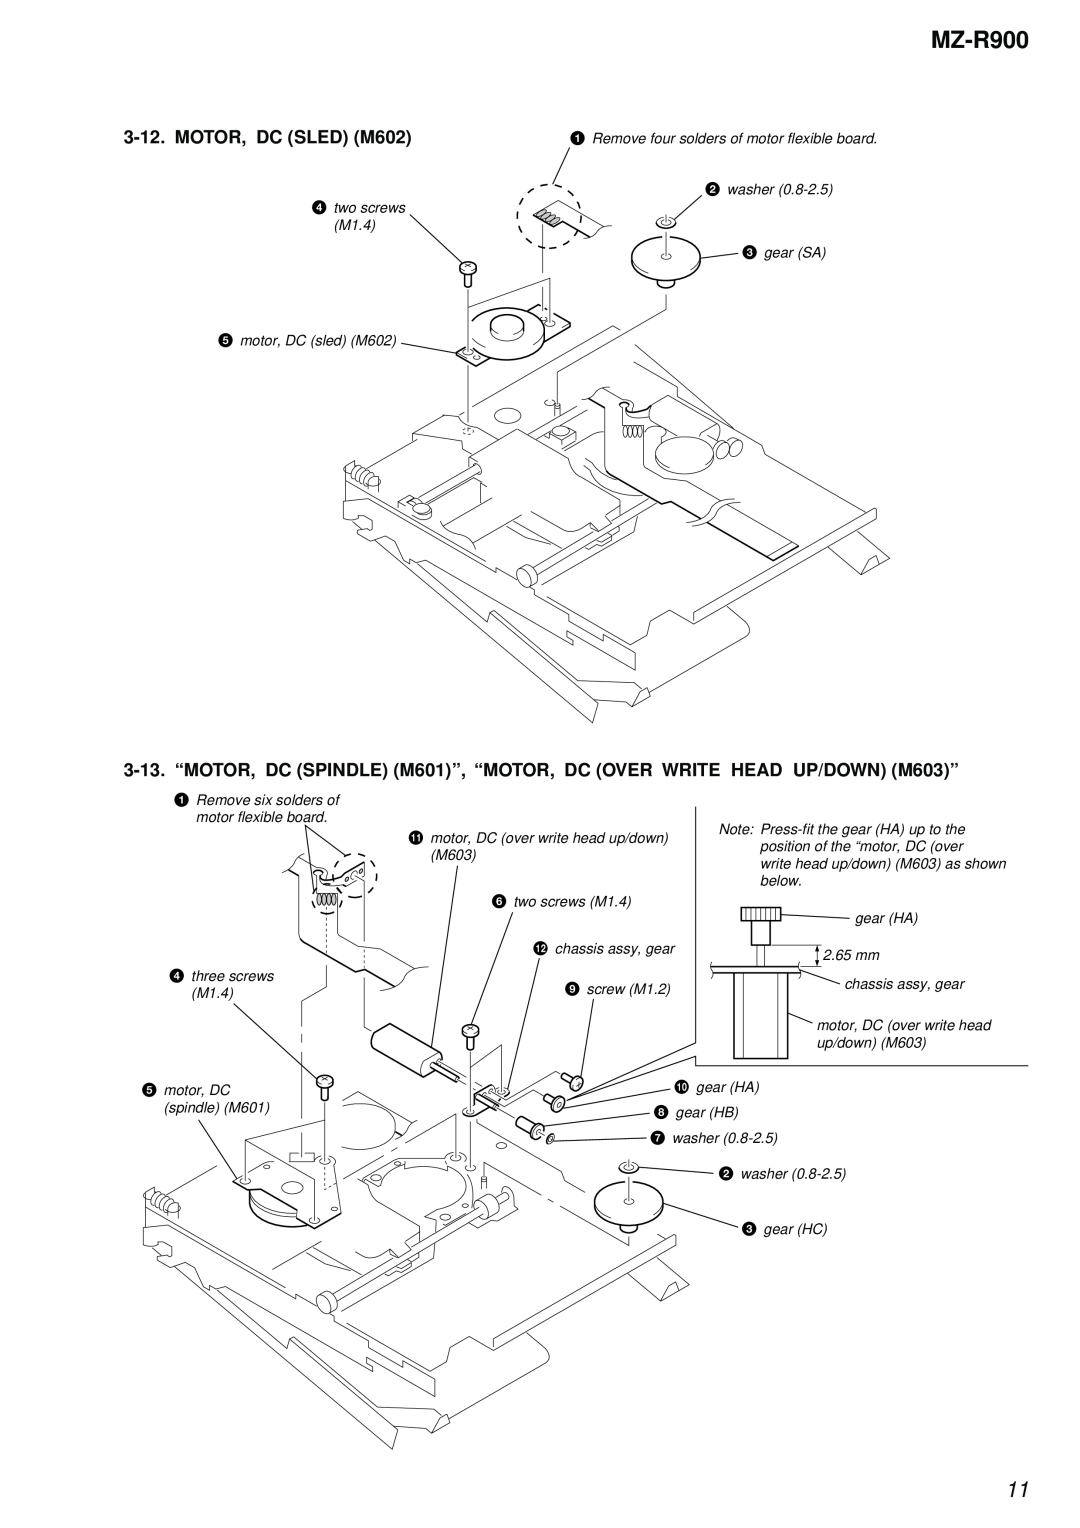 Sony MZ-R900 service manual MOTOR, DC SLED M602 